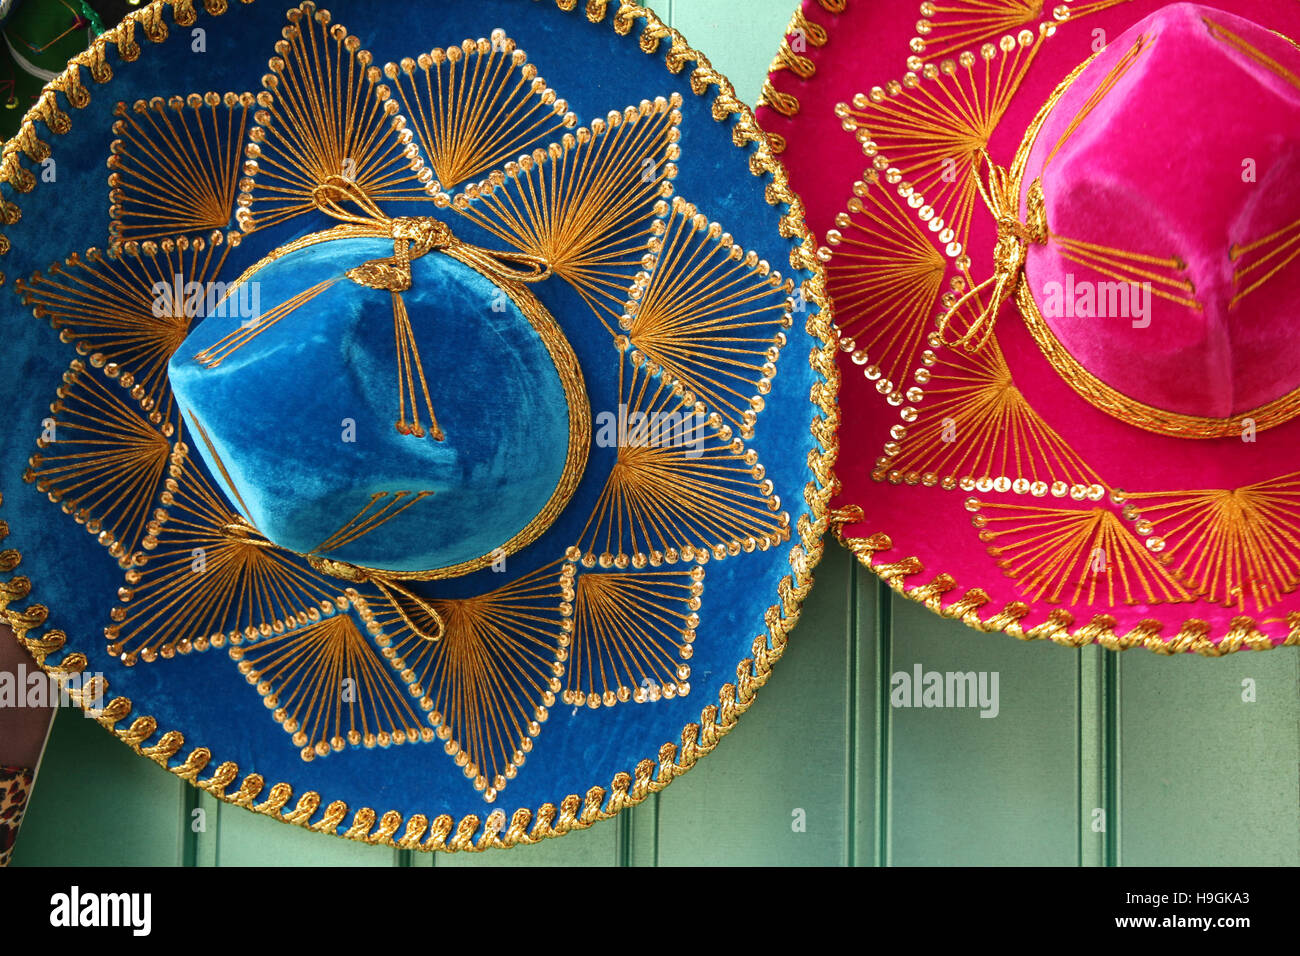 Bunten blauen & rosa mexikanische Hüte oder Sombreros hängt an einer grünen Tür, Cozumel, Halbinsel Yucatan, Quintana Roo, Mexiko. Stockfoto